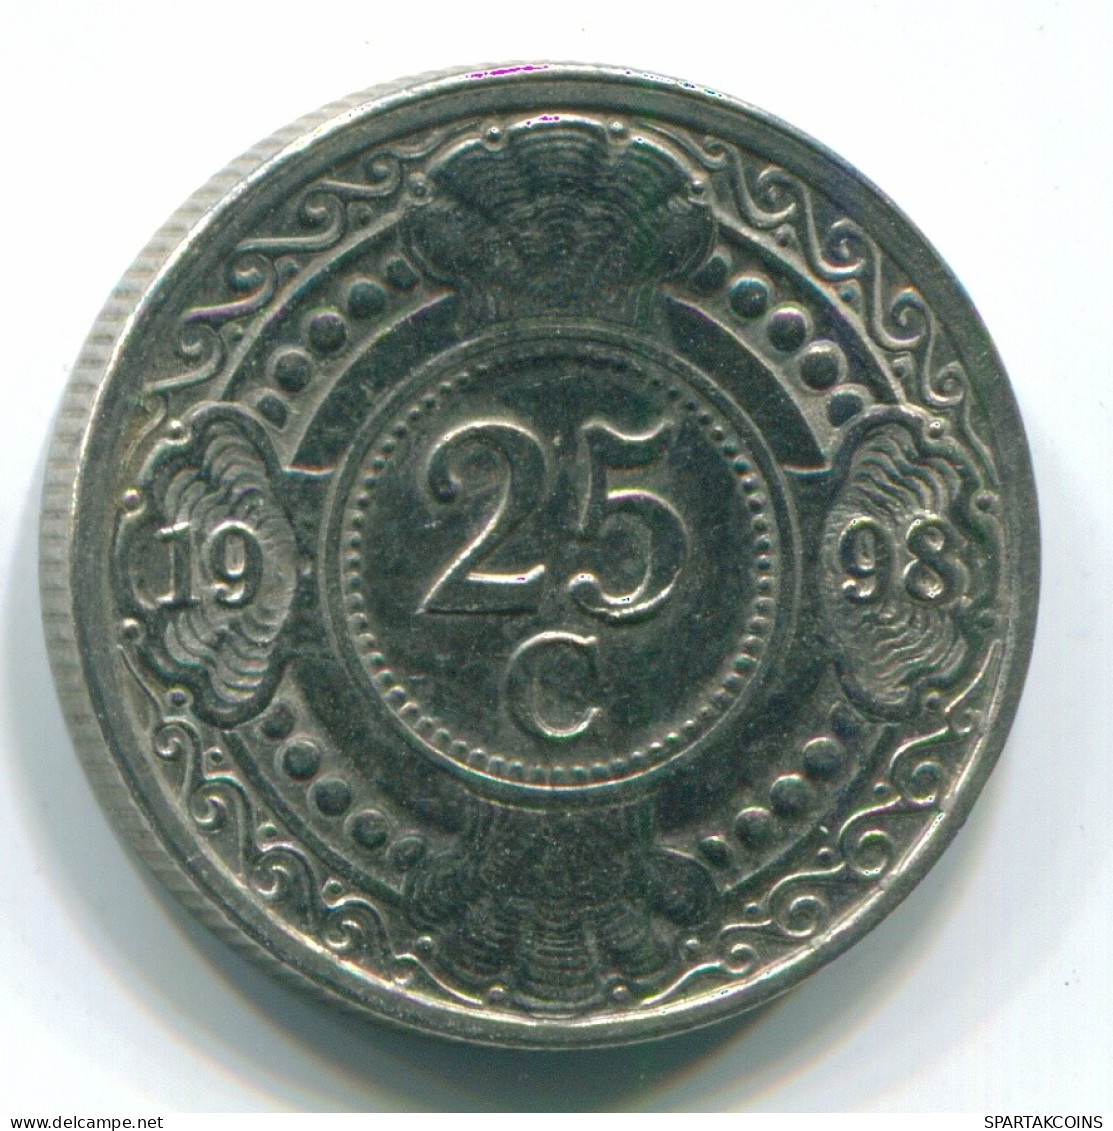 25 CENTS 1998 NIEDERLÄNDISCHE ANTILLEN Nickel Koloniale Münze #S11301.D.A - Netherlands Antilles